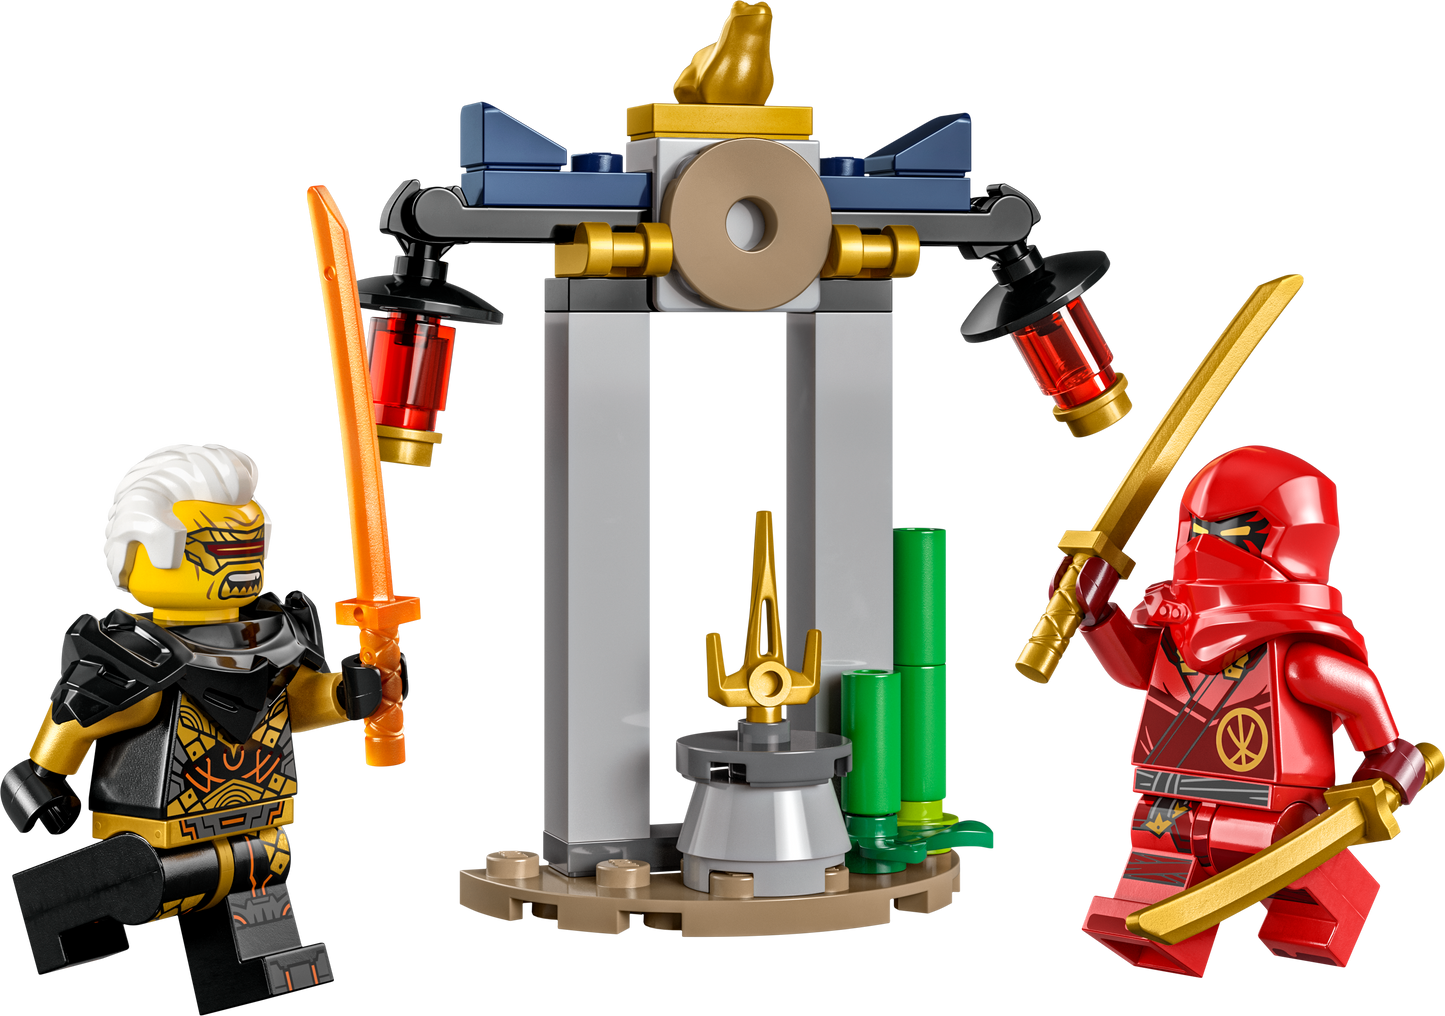 LEGO® Polybag Ninjago 30650 Kais und Raptons Duell im Tempel